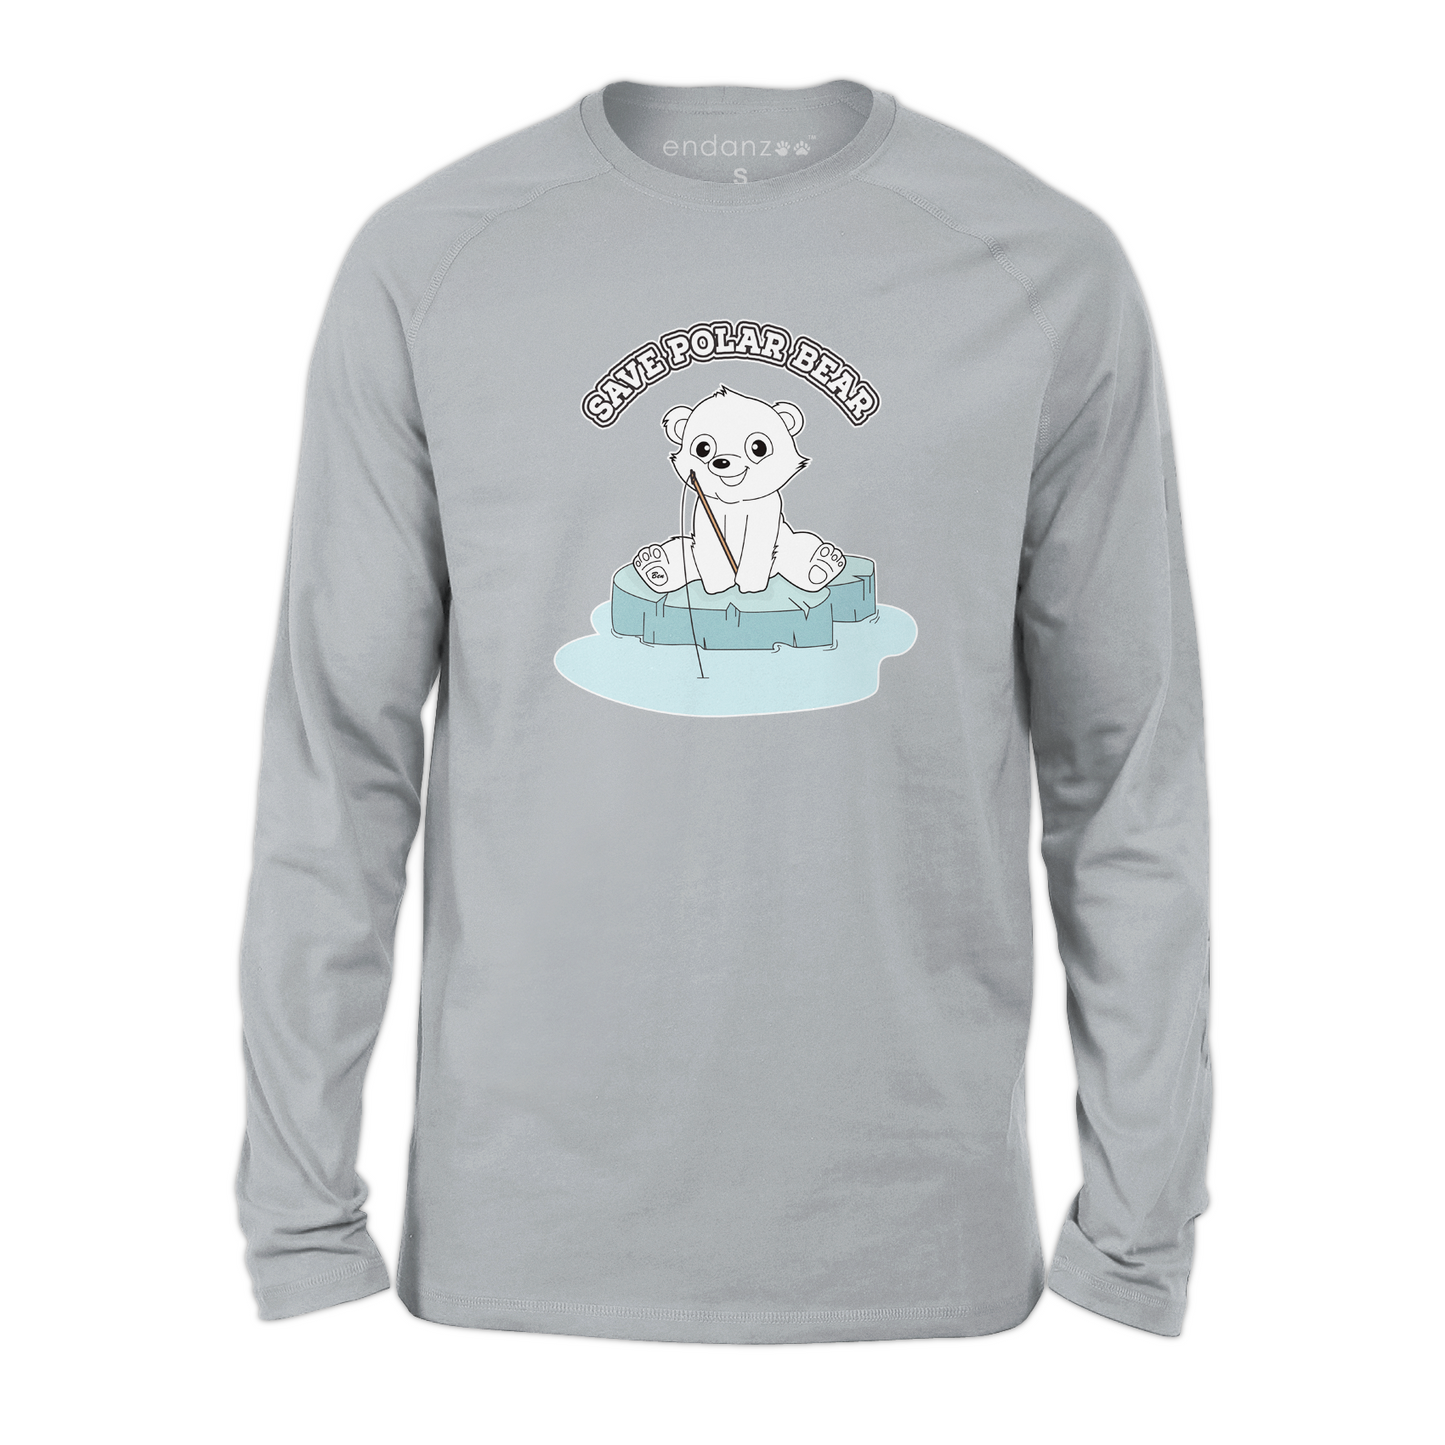 Endanzoo Organic Kids Three-quarter Sleeve Tee Shirt - Polar Bear On Sea Ice (Grey)